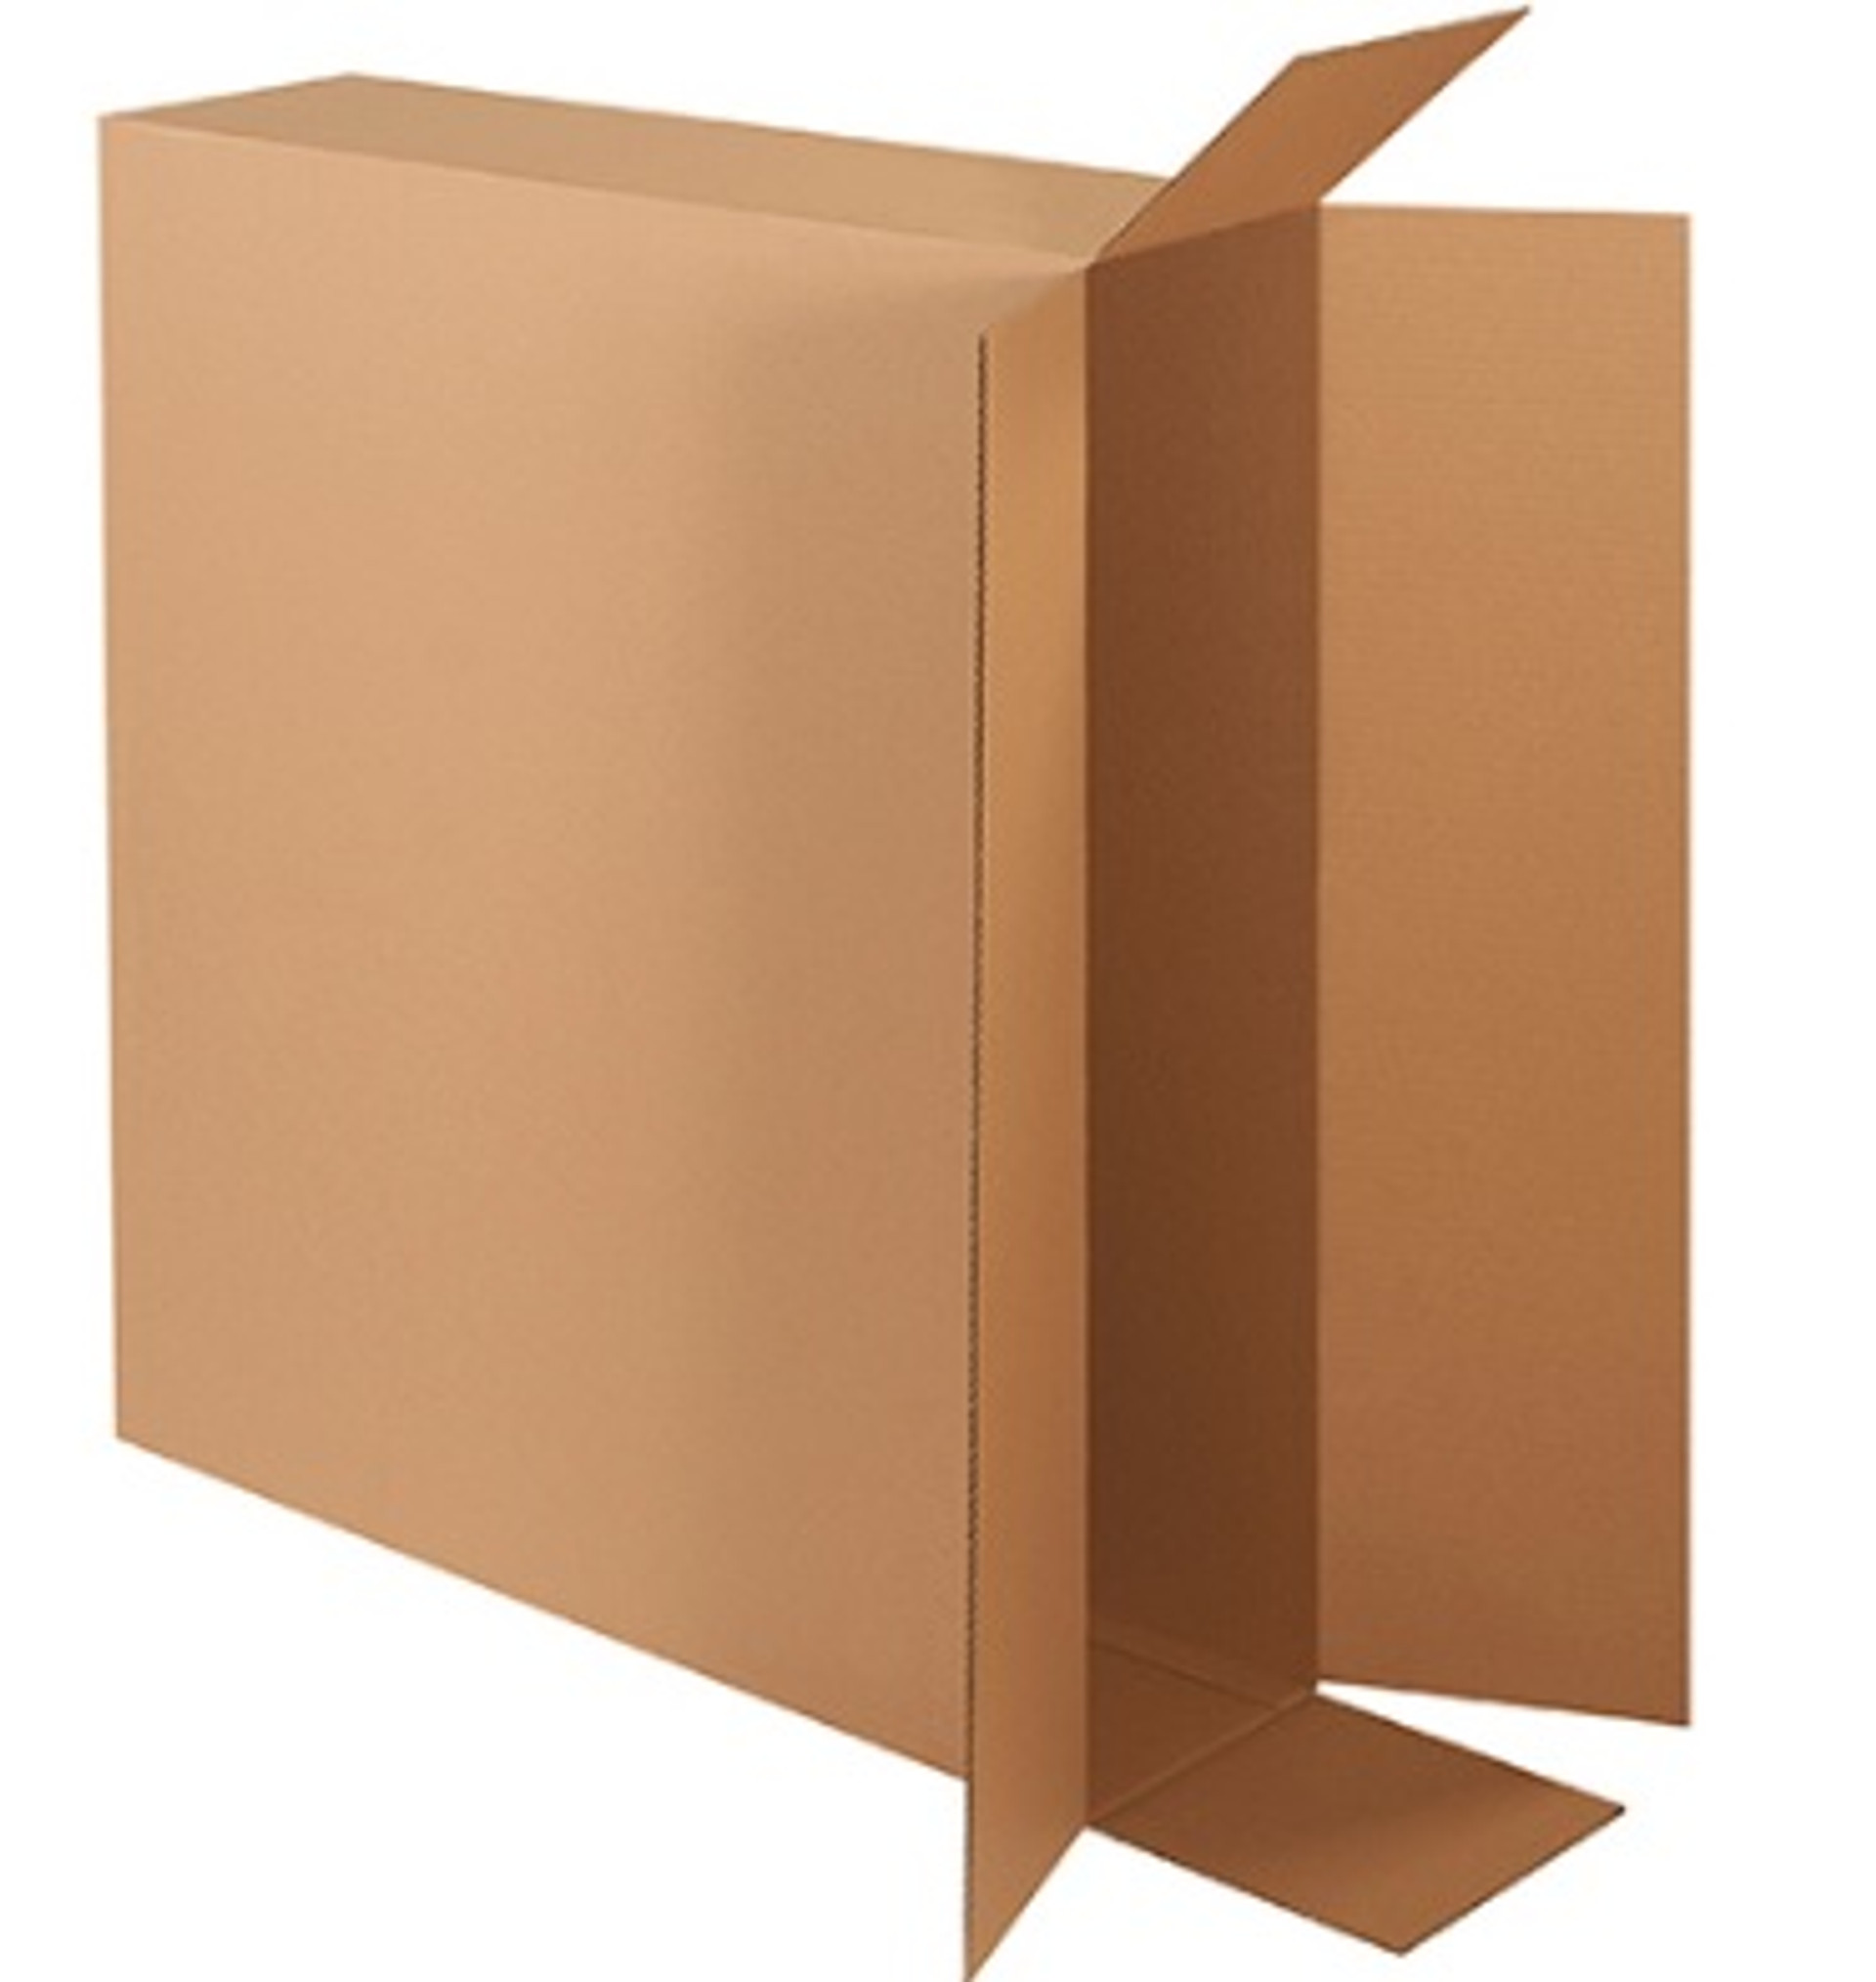 30 X 5 X 30 Side Loading Corrugated Cardboard Shipping Boxes 10 Bundle